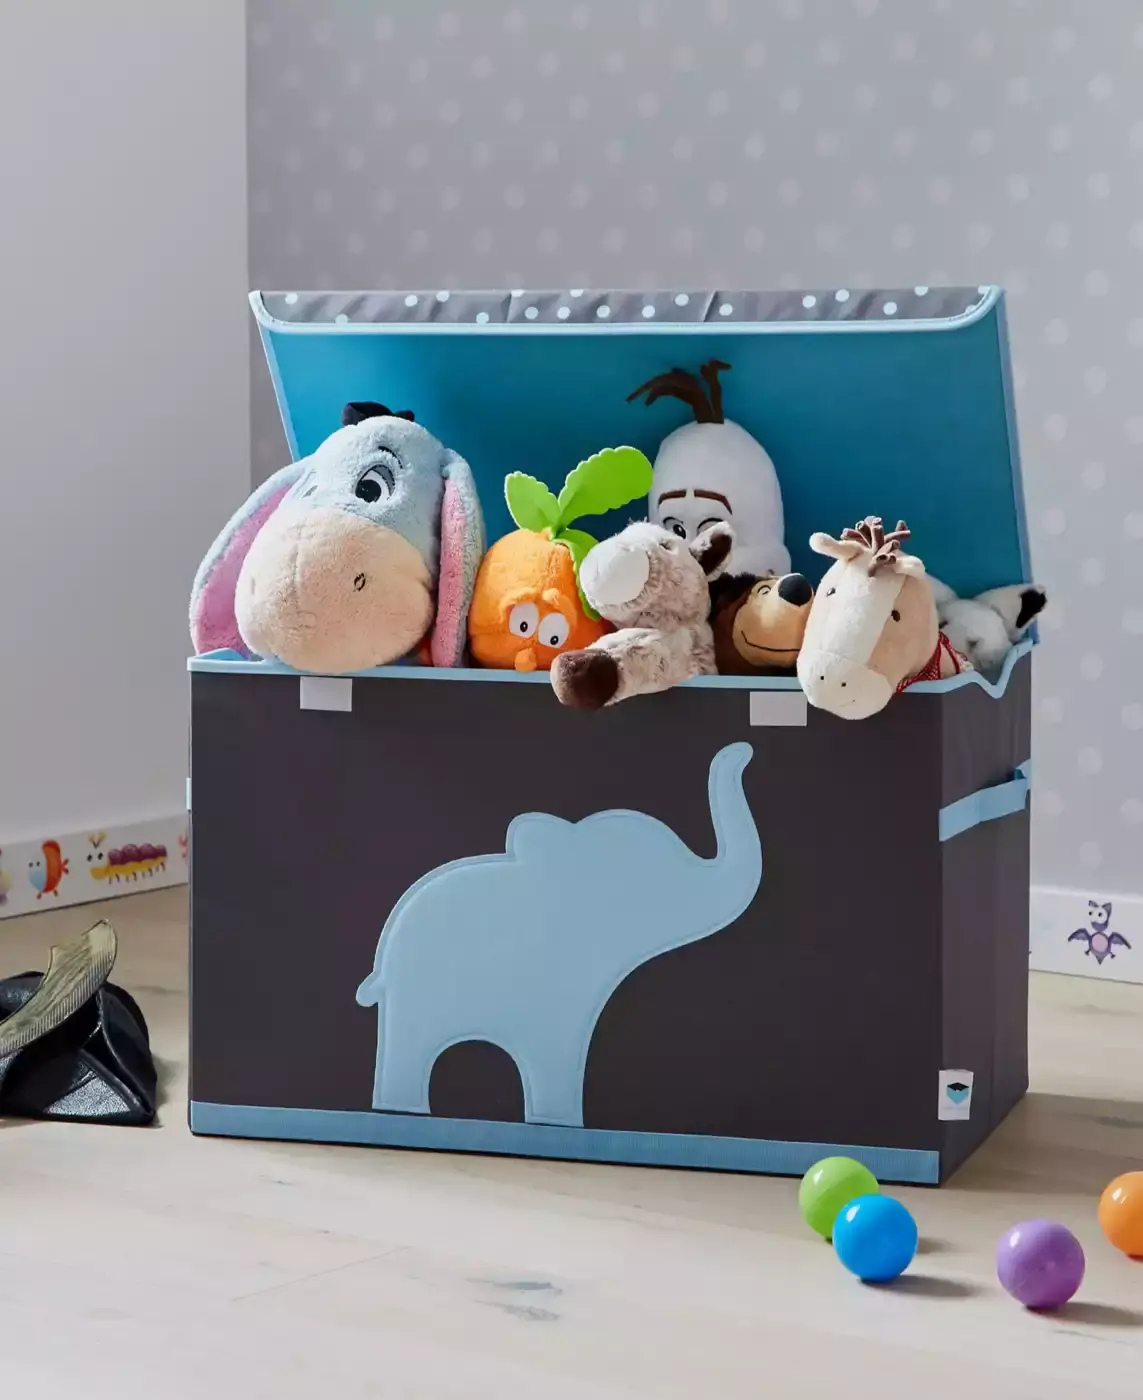 Spielzeugtruhe mit Elefant Store.it! 2000572138604 2